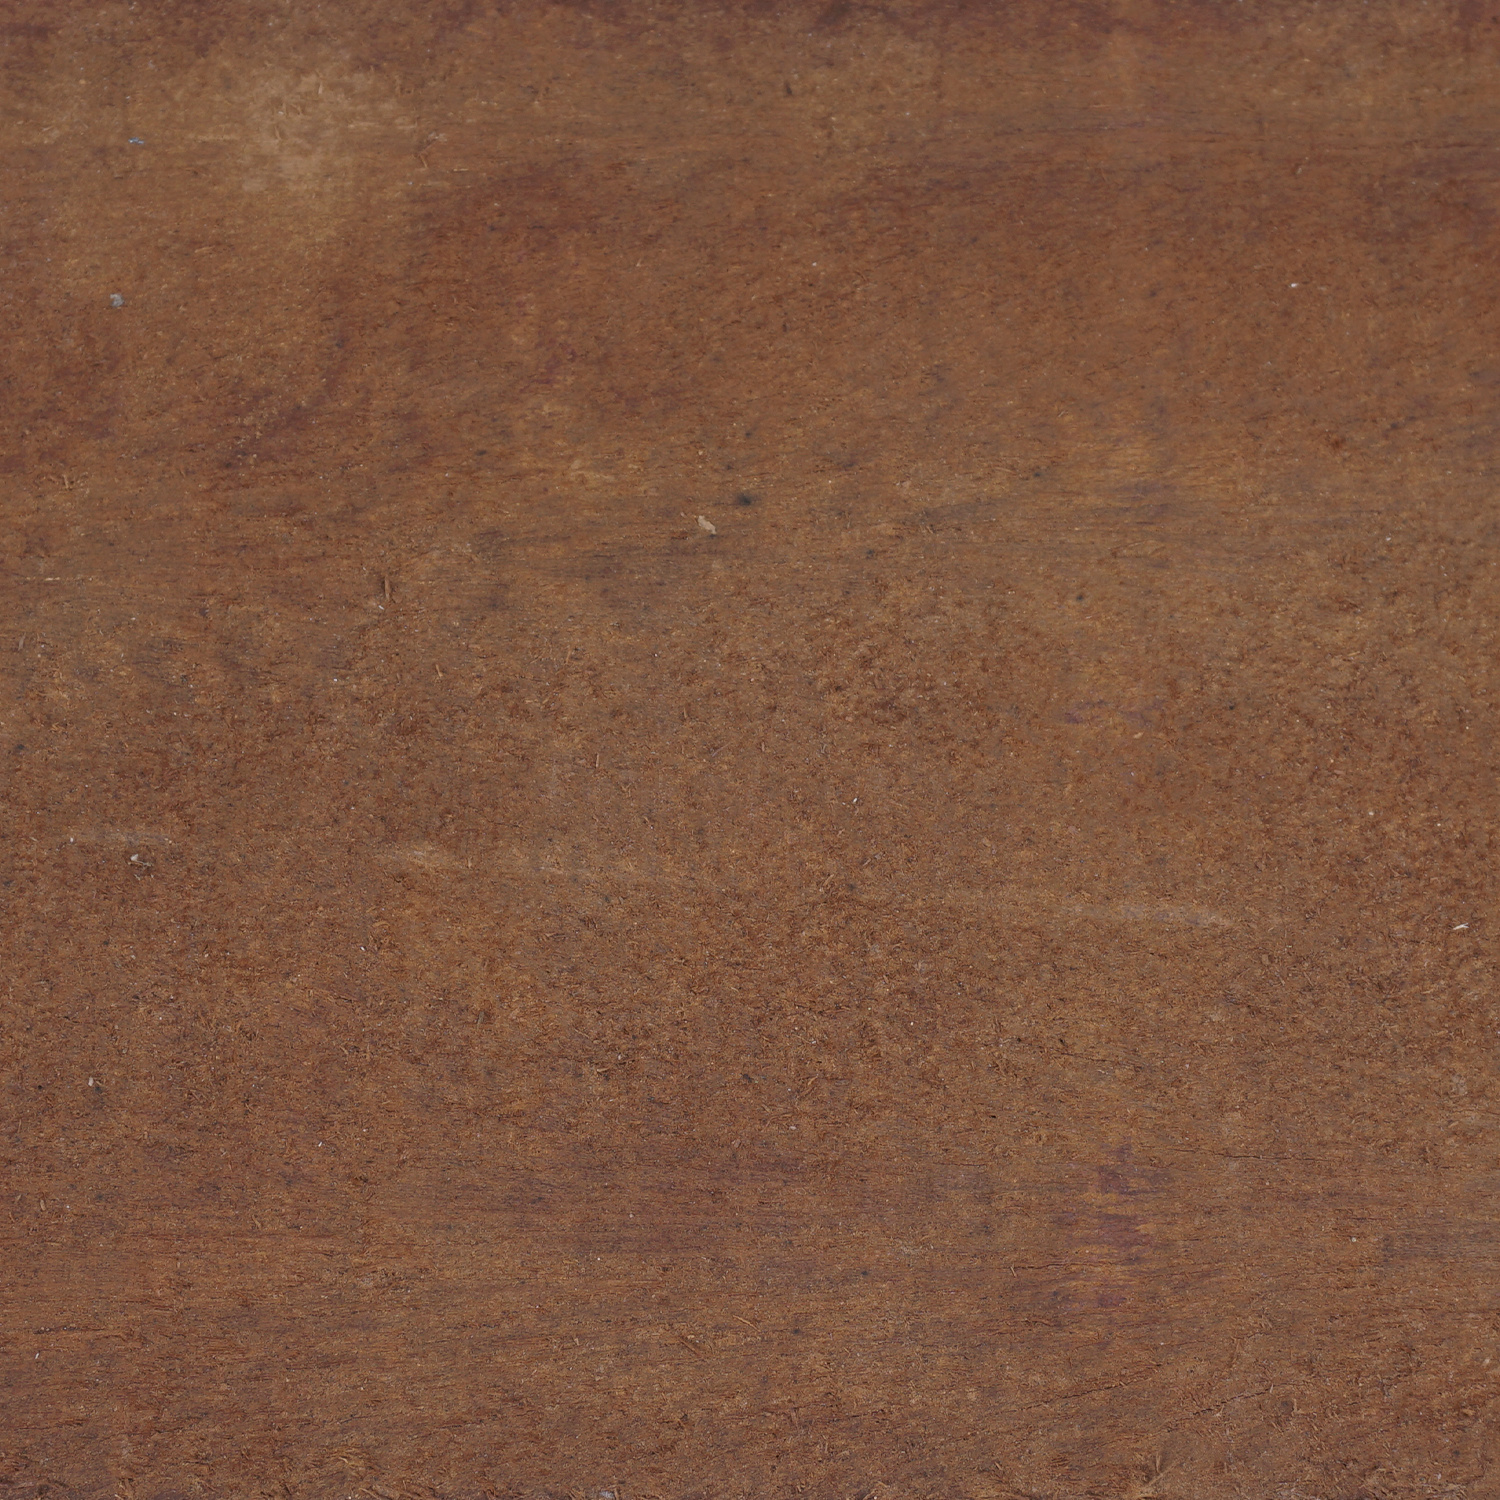  Angelim vermelho balk 50x250mm - ruw (fijnbezaagd) - tropisch hardhout ad (aangedroogd)